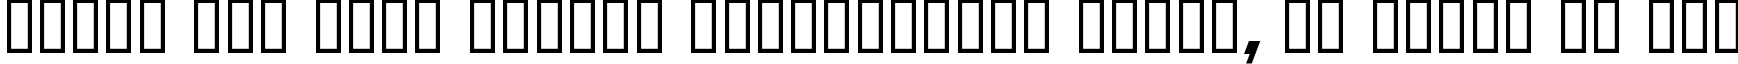 Пример написания шрифтом Soviet Italic текста на русском